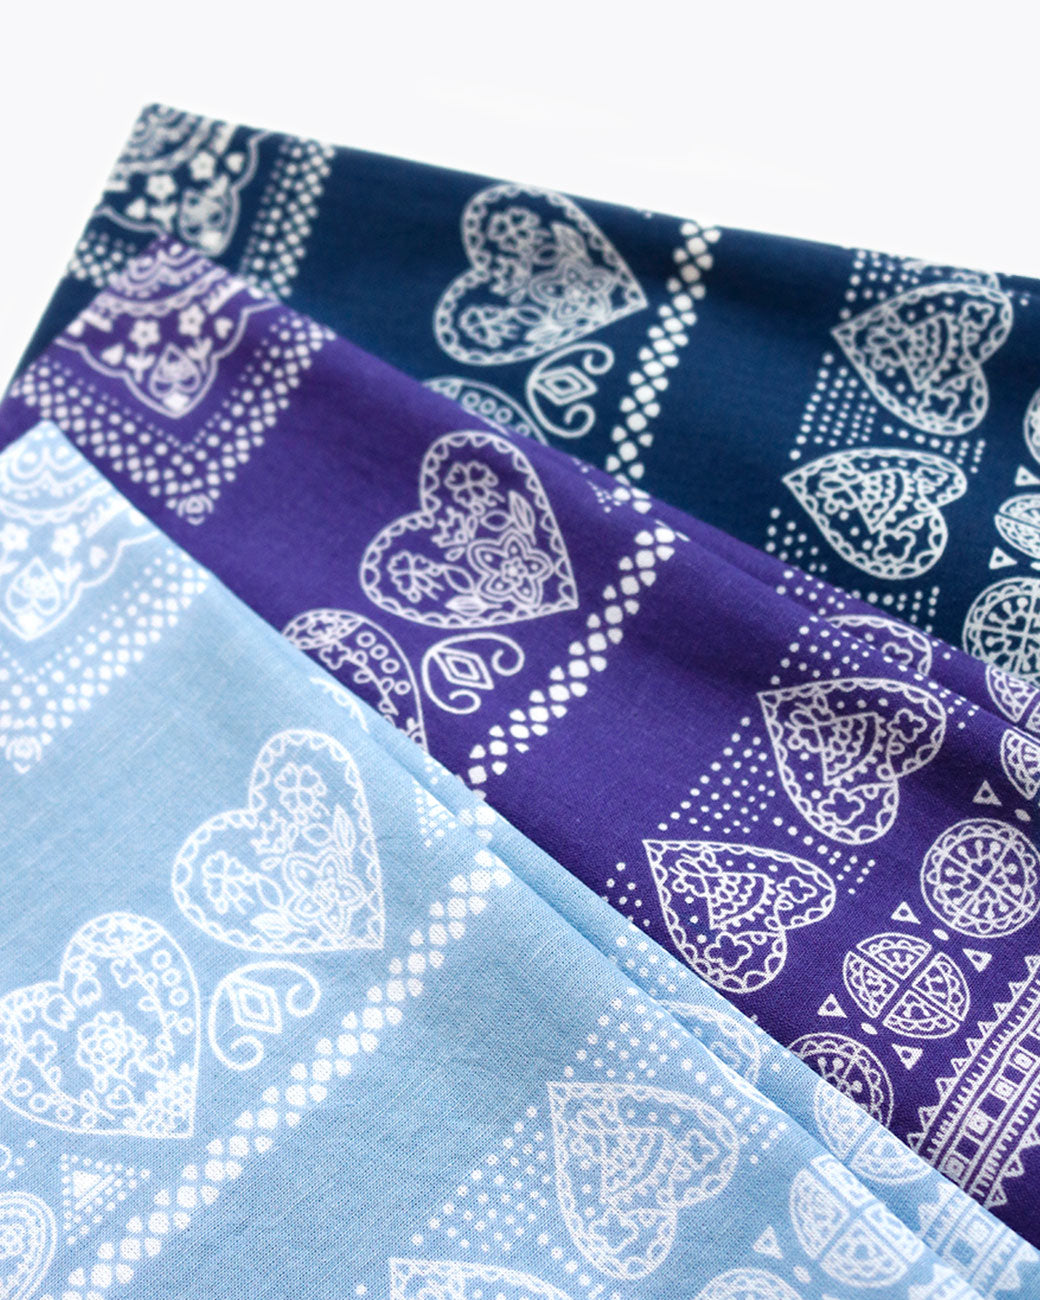 Kapital henna cube bandanas in purple, sax blue, and navy blue.